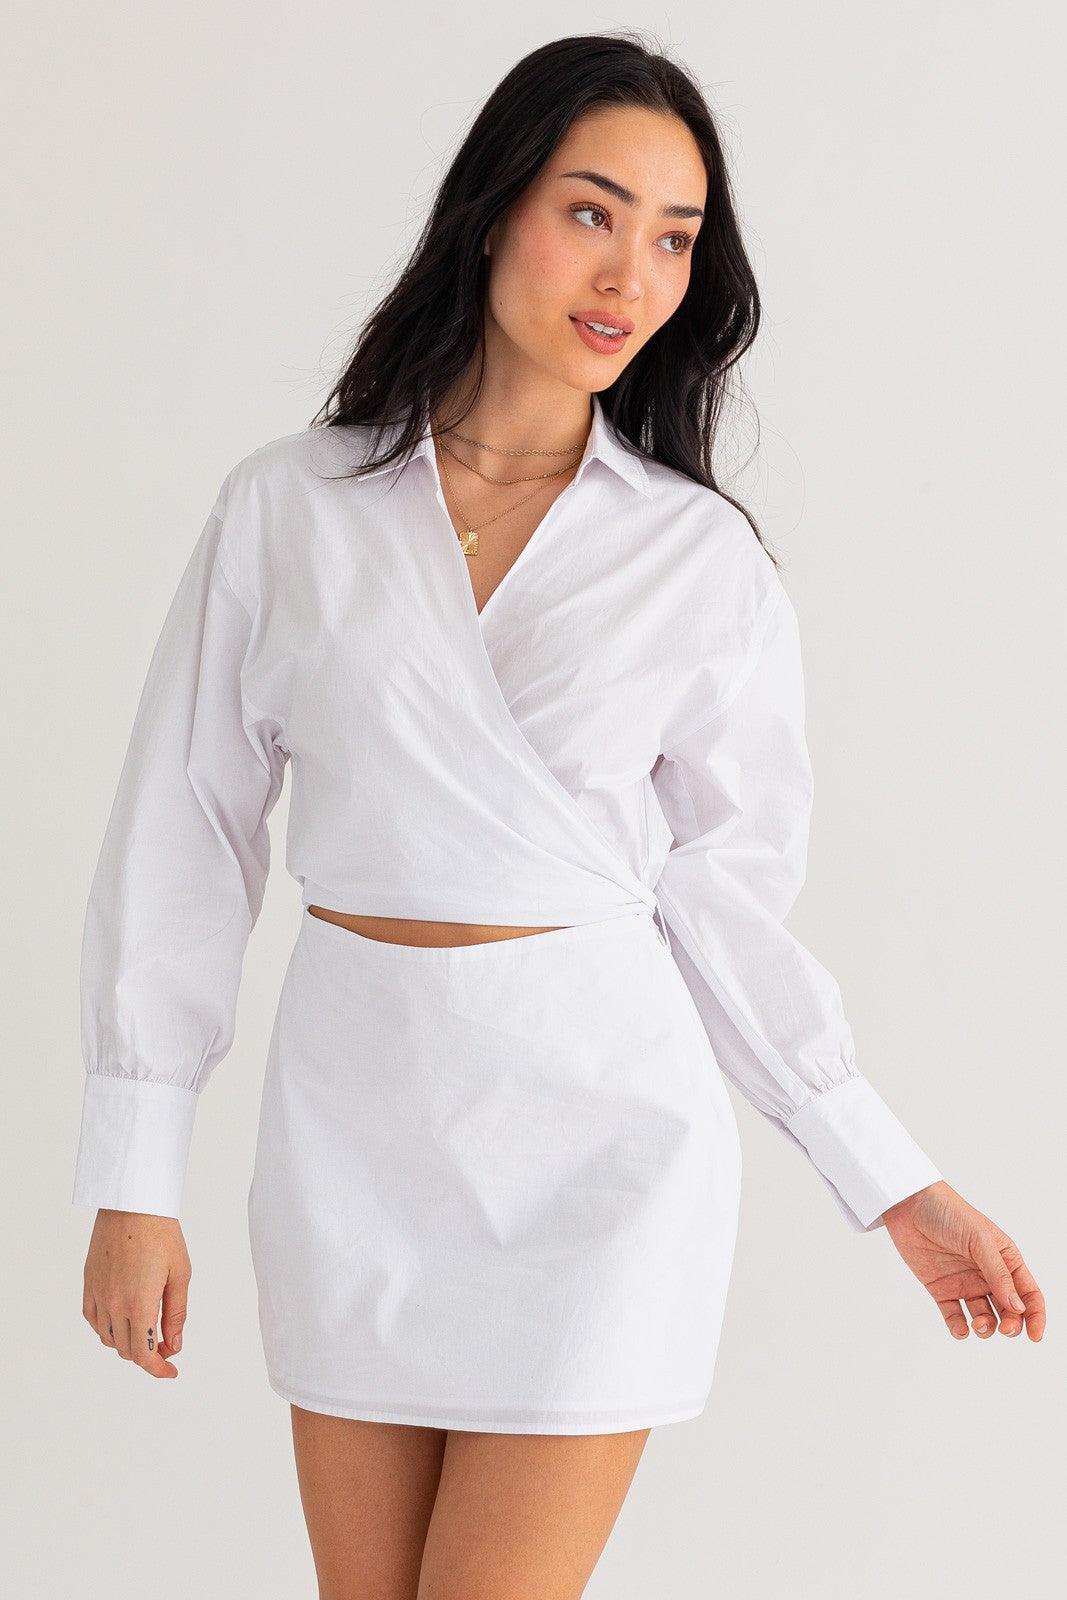 wrap front cut out shirt dress - RK Collections Boutique